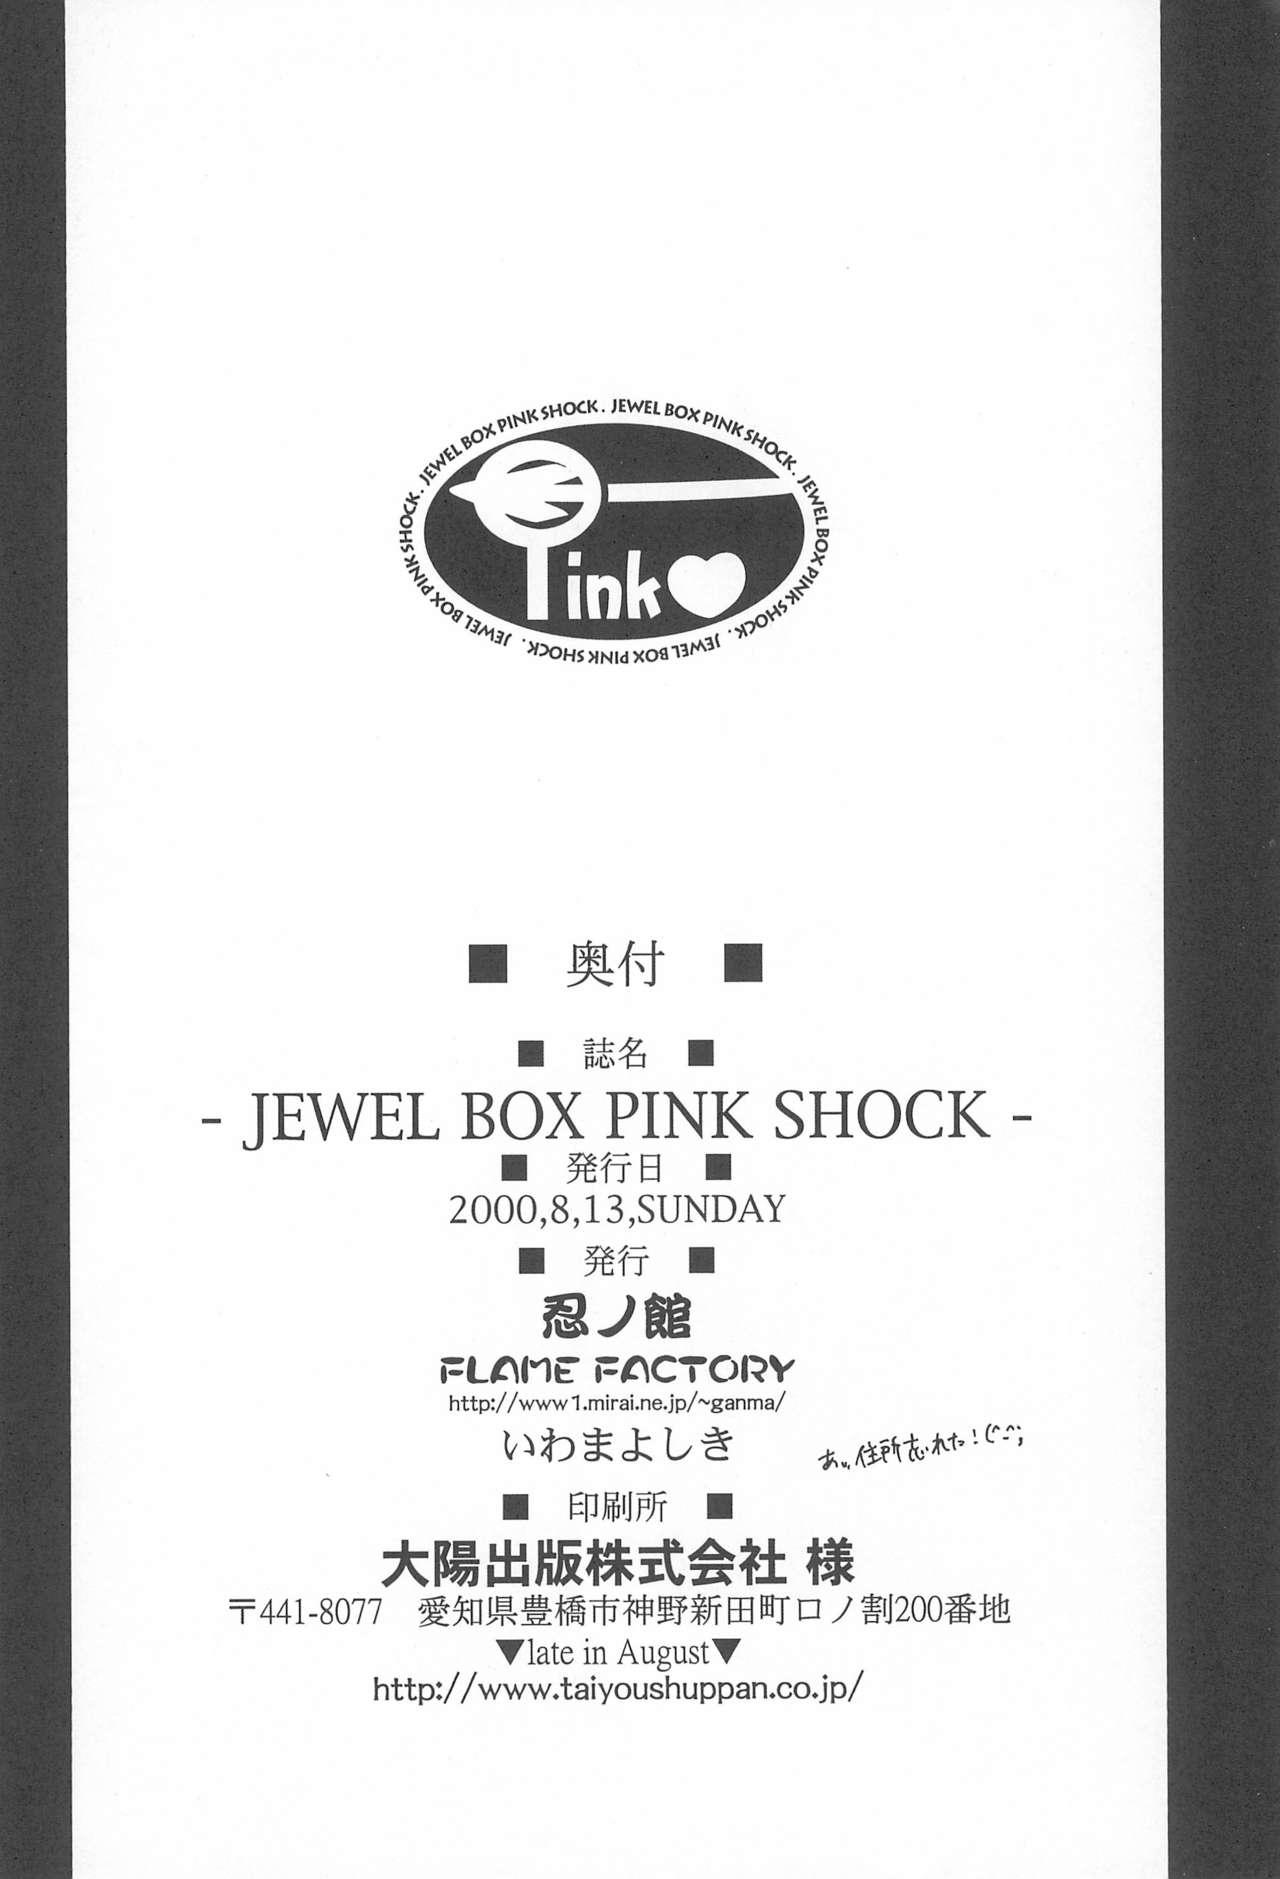 JEWEL BOX PINK SHOCK 33